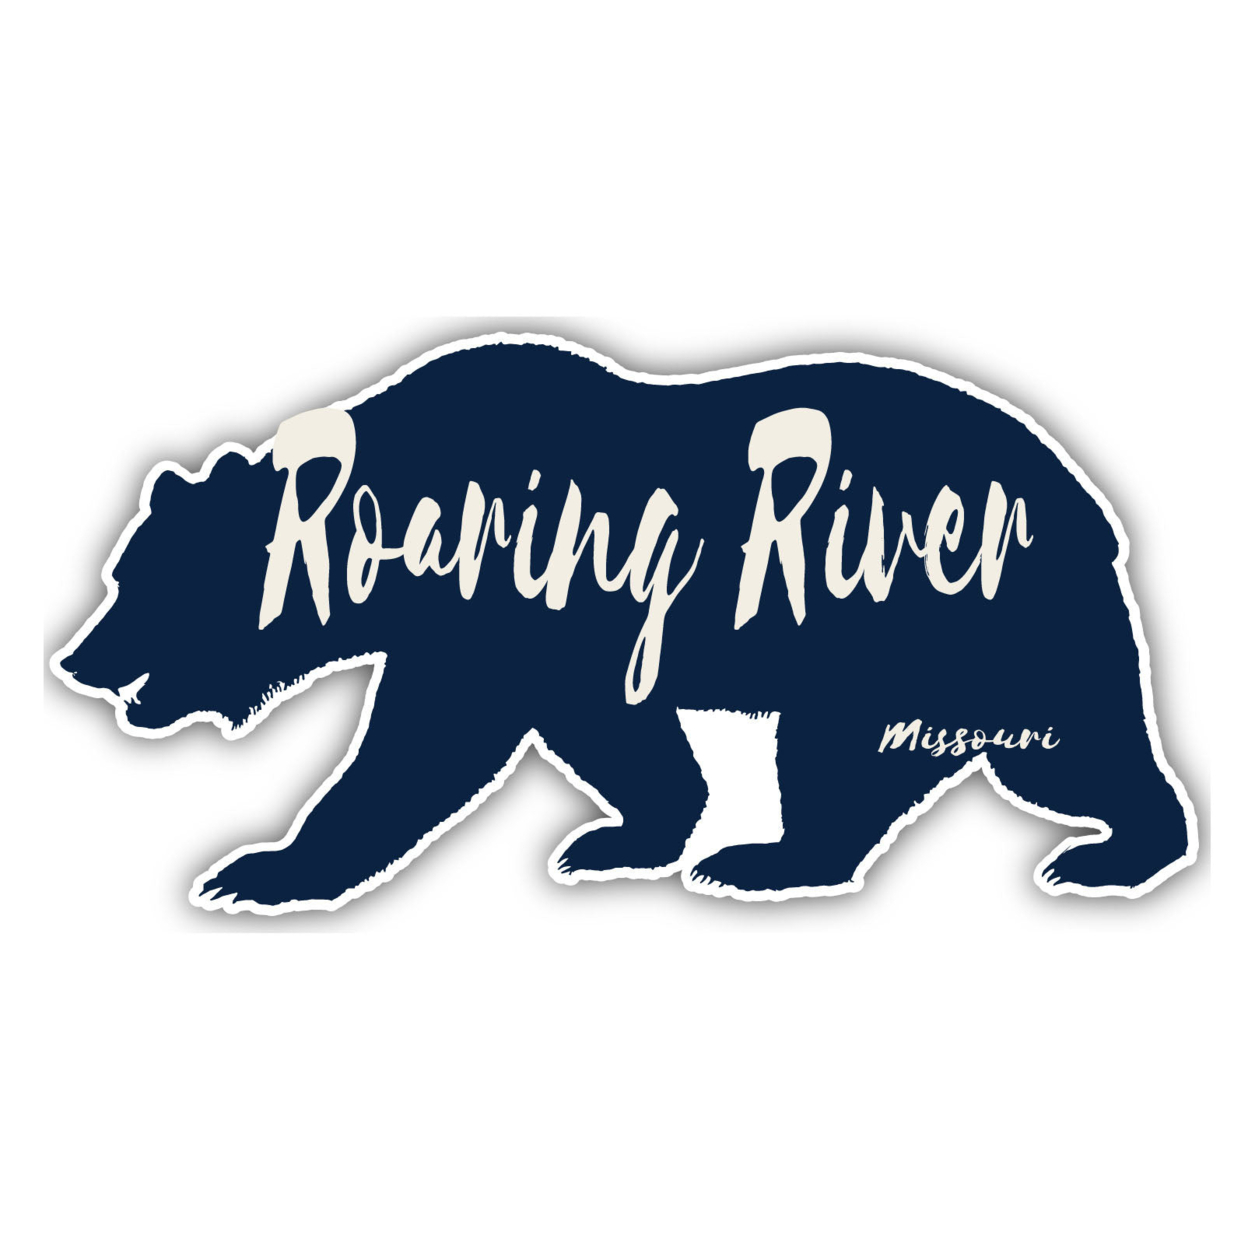 Roaring River Missouri Souvenir Decorative Stickers (Choose Theme And Size) - Single Unit, 2-Inch, Bear